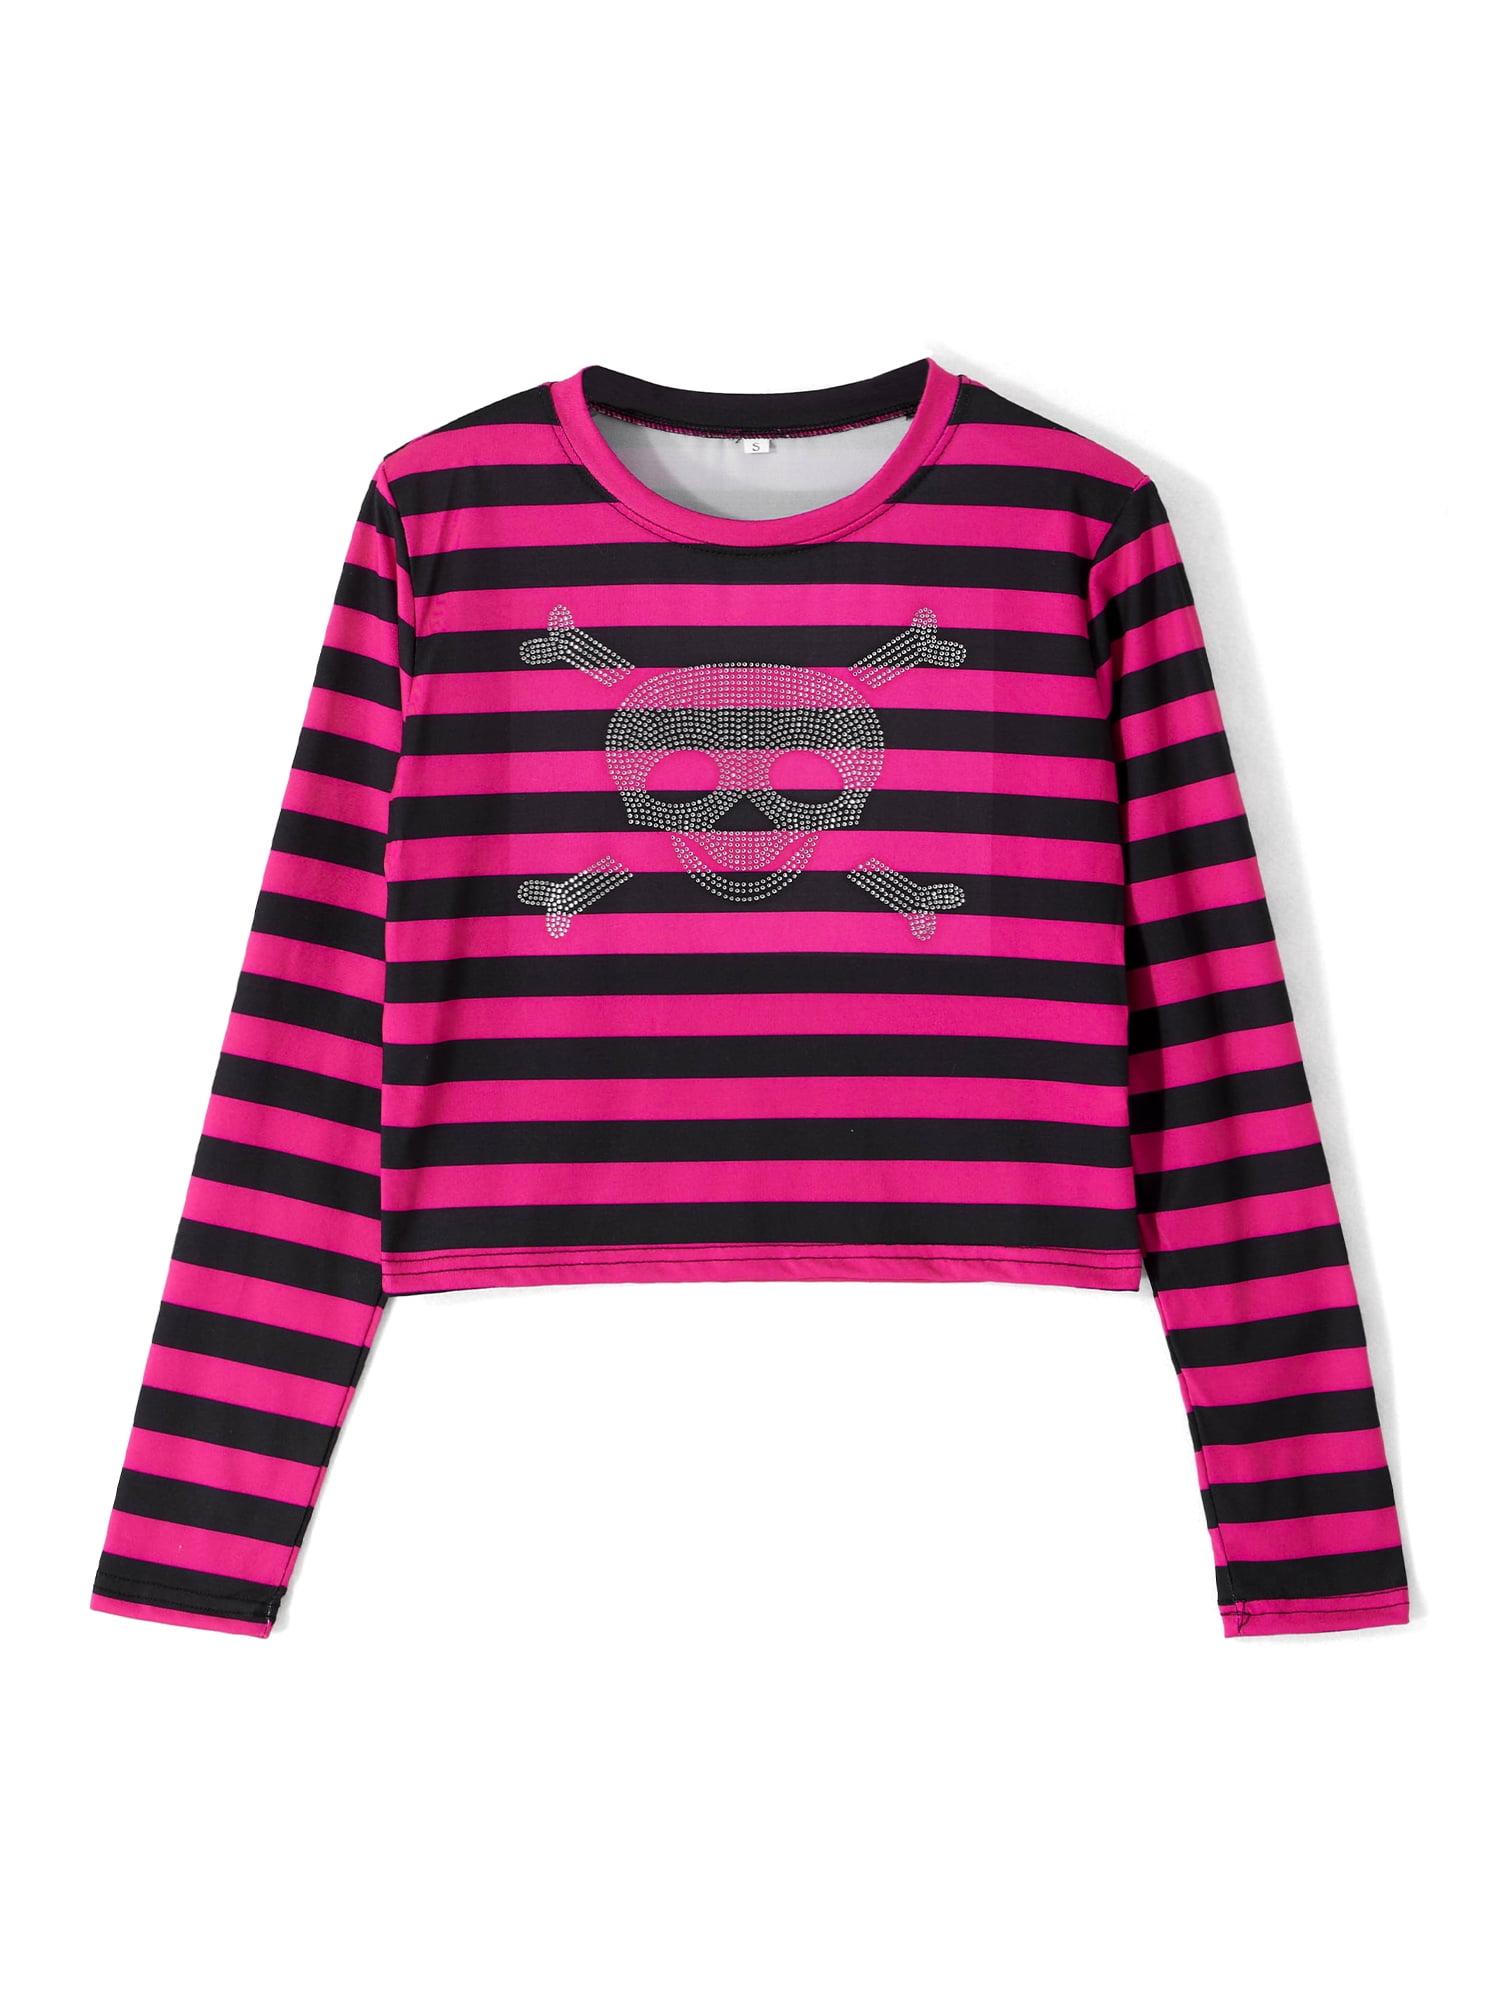 Sunisery Women Vintage Round Rhinestone Pink T-shirt Sleeve Long Streetwear Printed Tops L Stripe Neck Fall Skull Crop